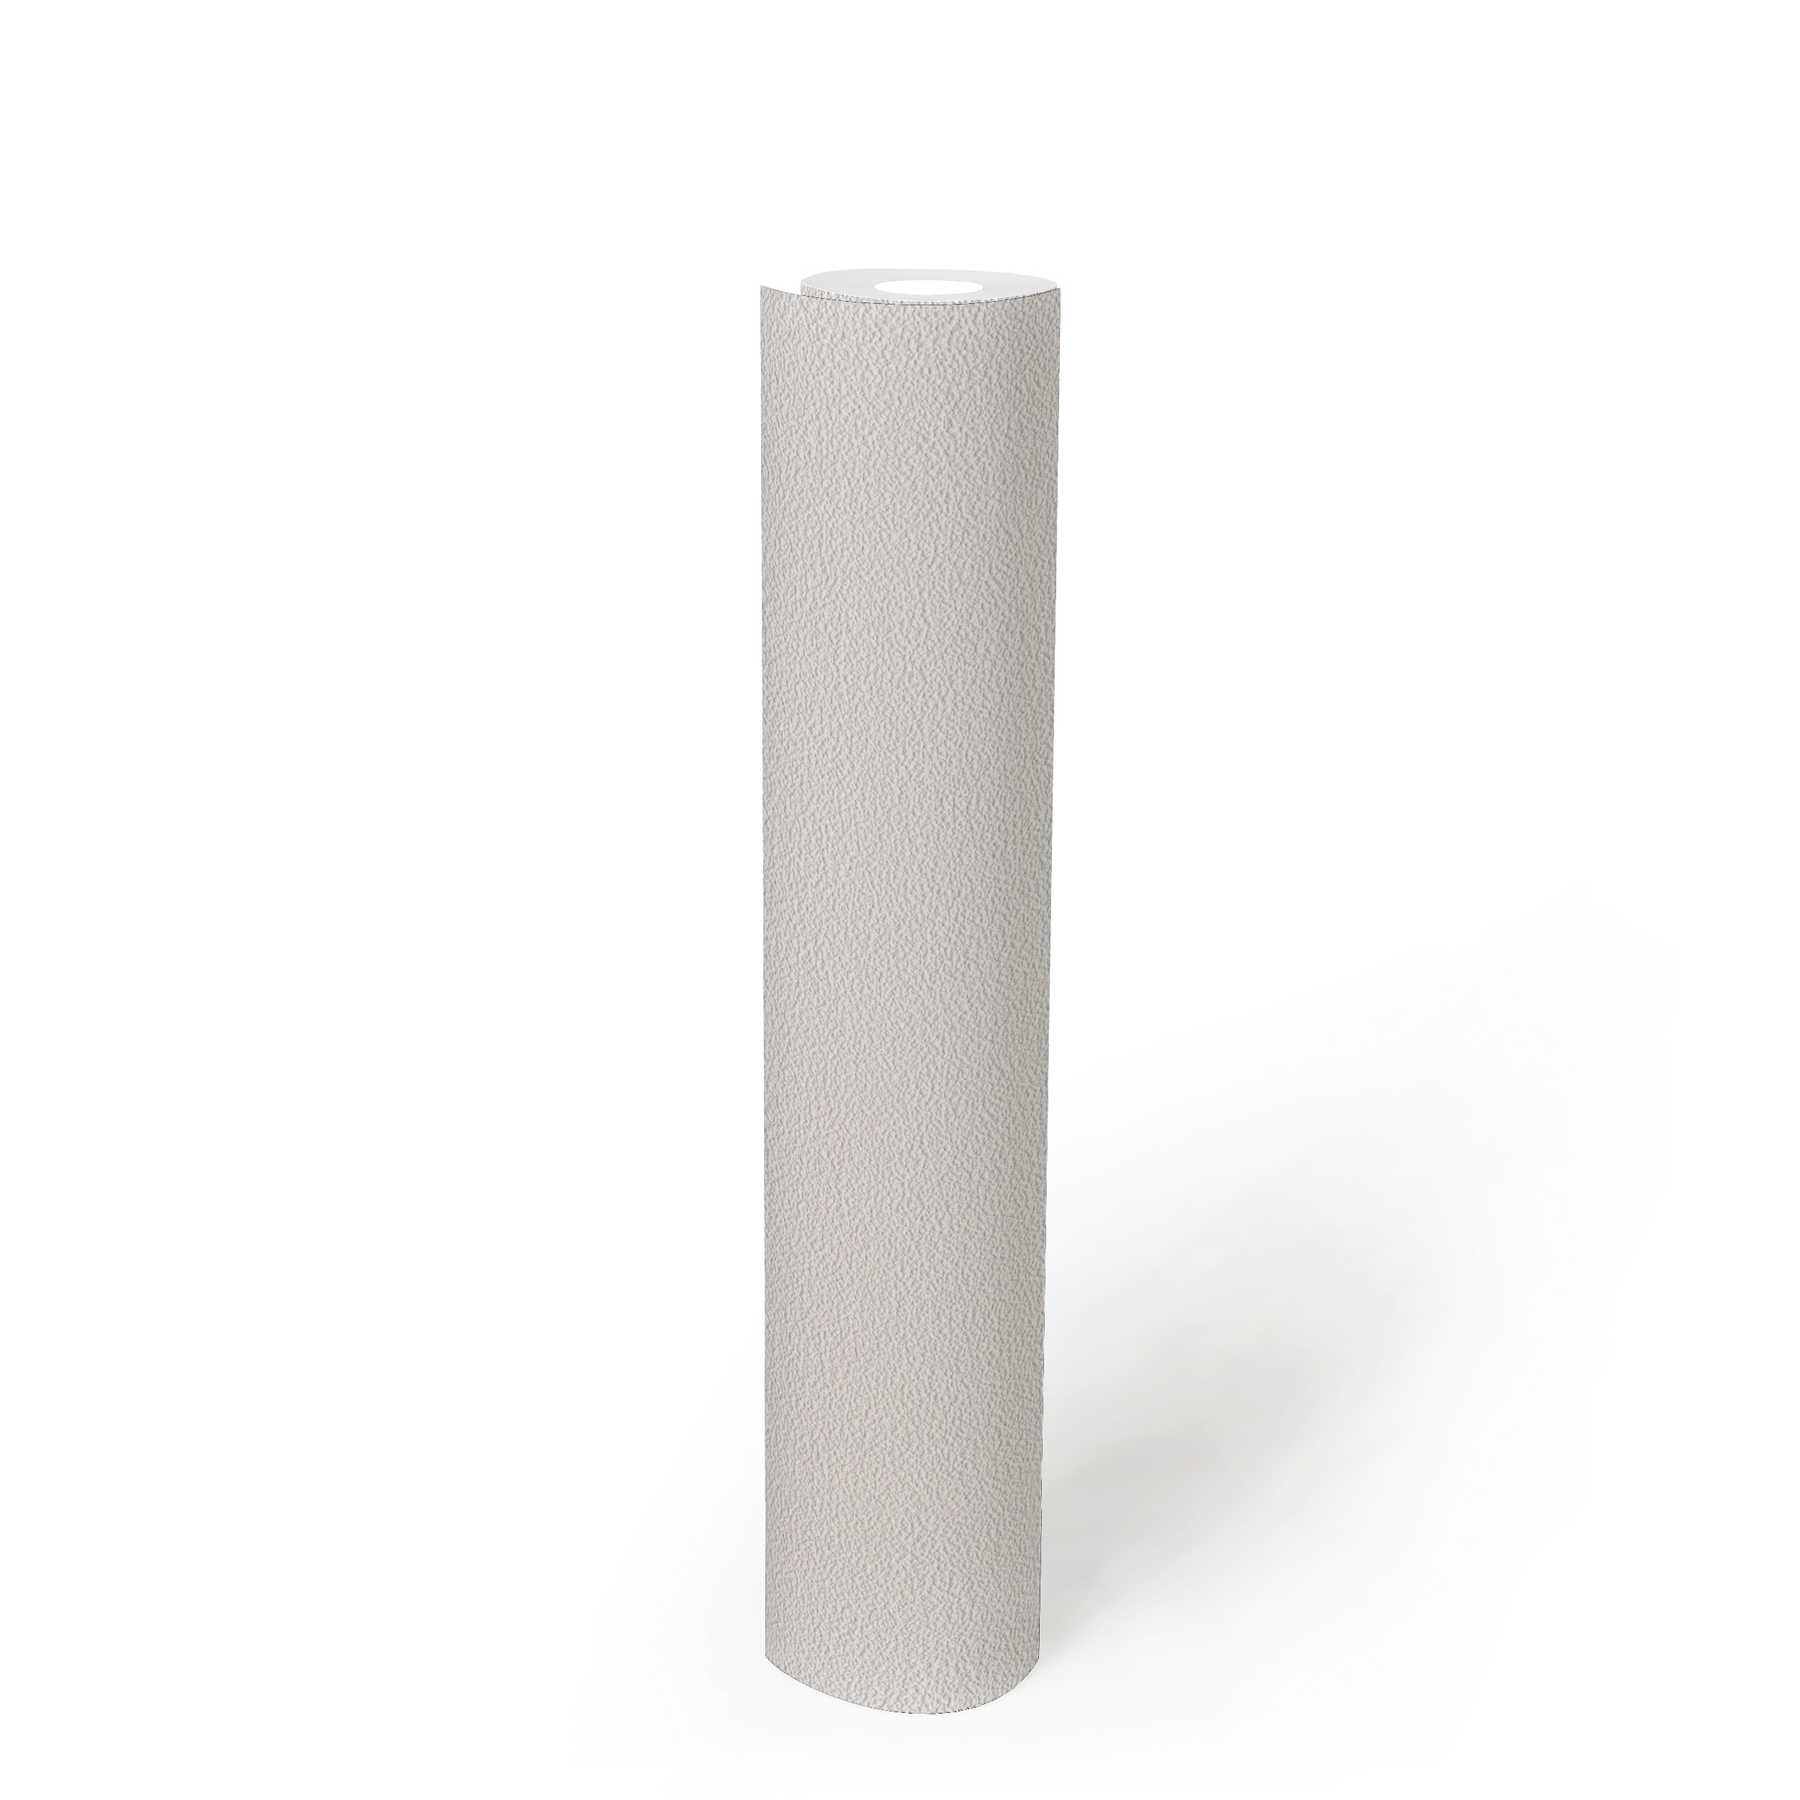             Papel pintado blanco con superficie texturizada con aspecto de yeso fino
        